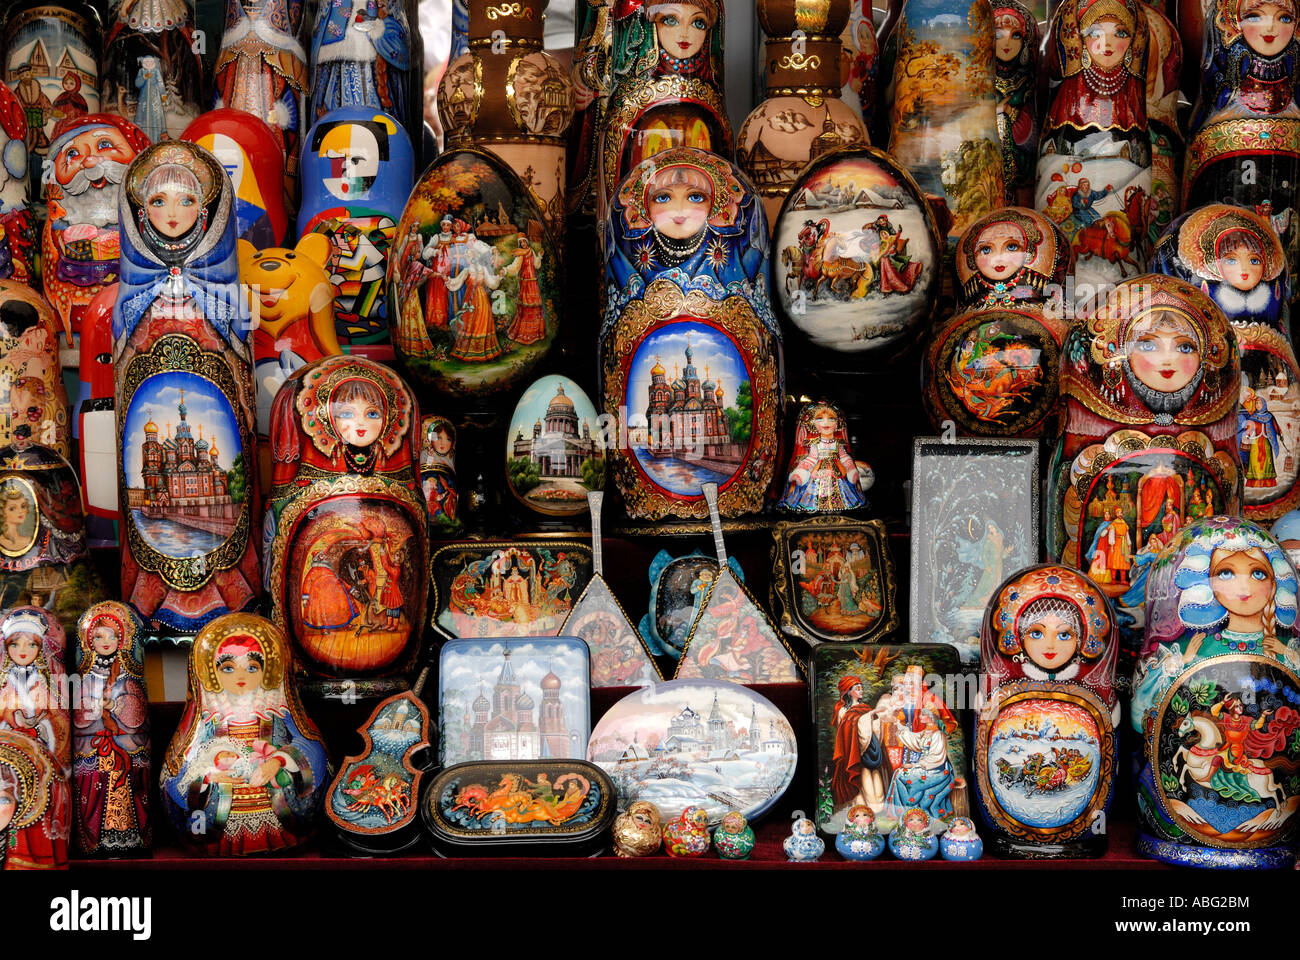 Souvenirs rusos fotografías e imágenes de alta resolución - Alamy